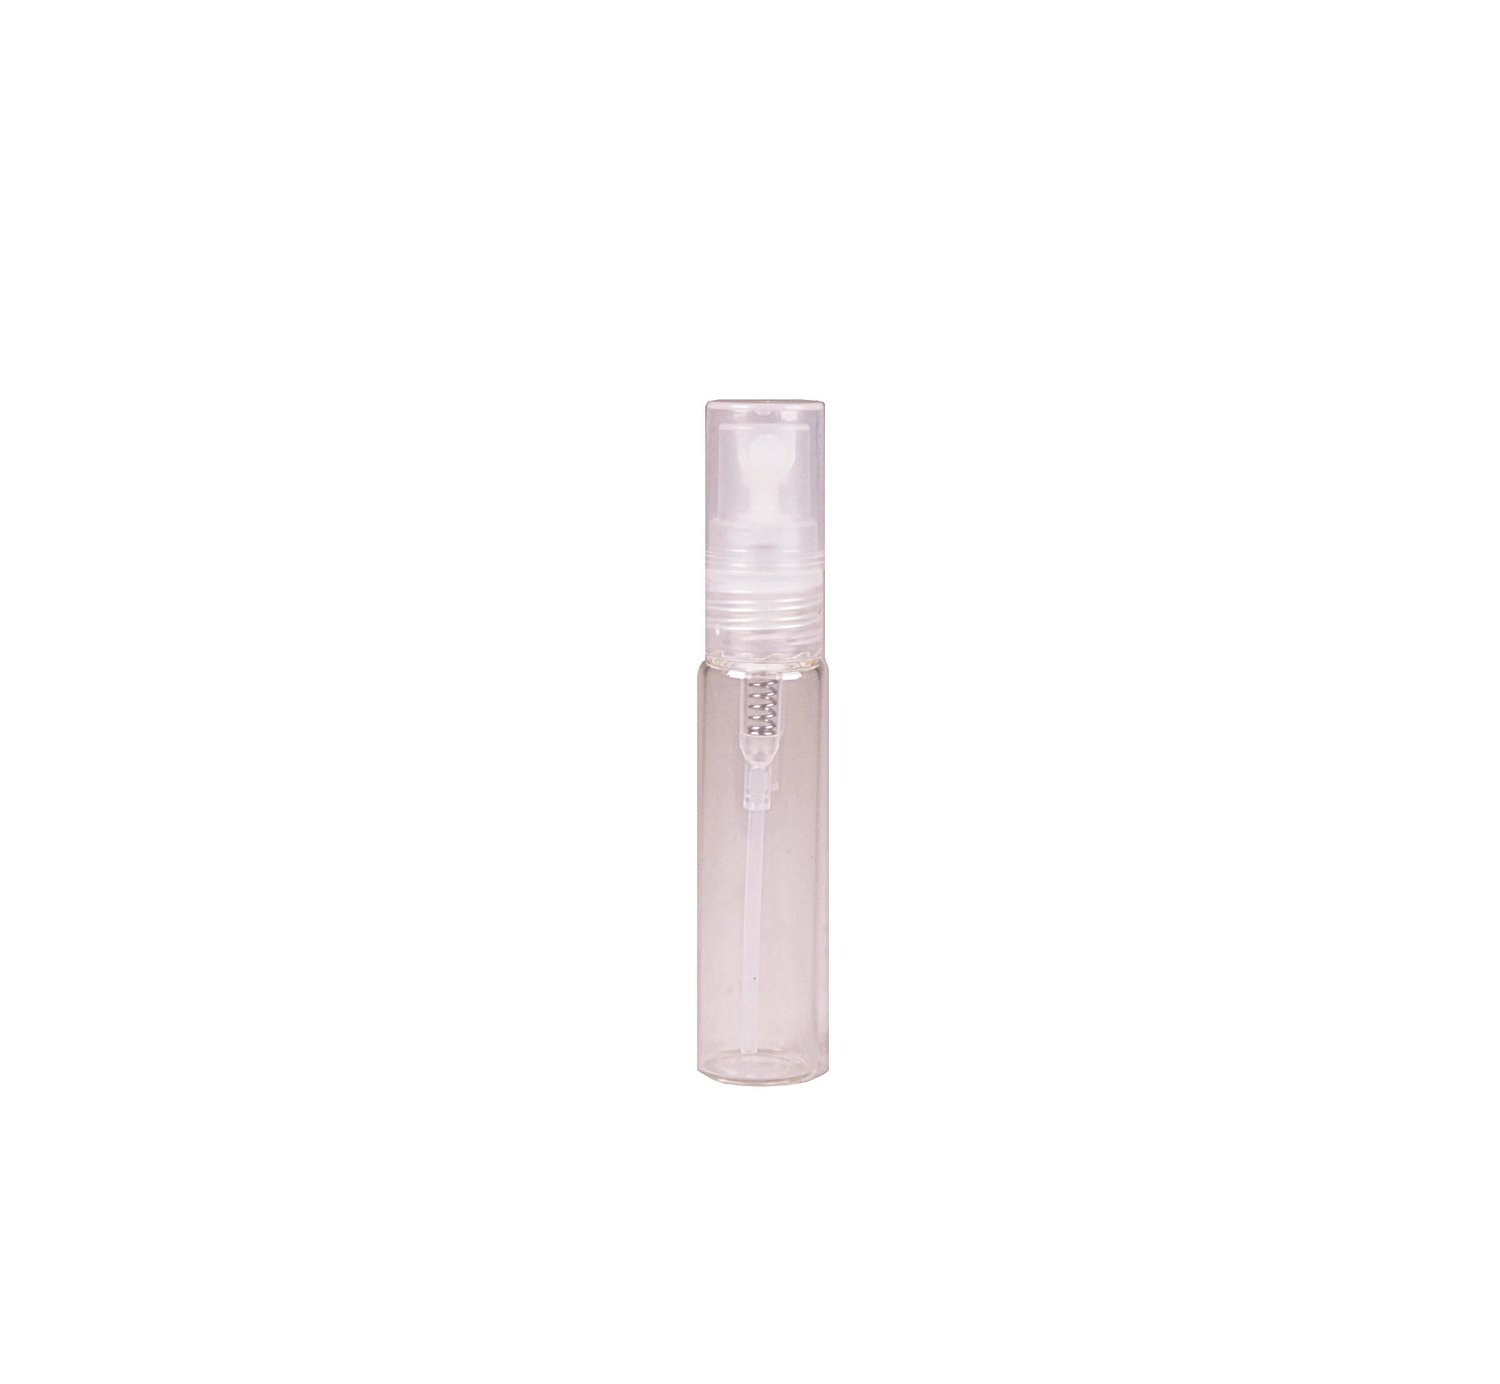 5ml, Clear Perfume Bottle